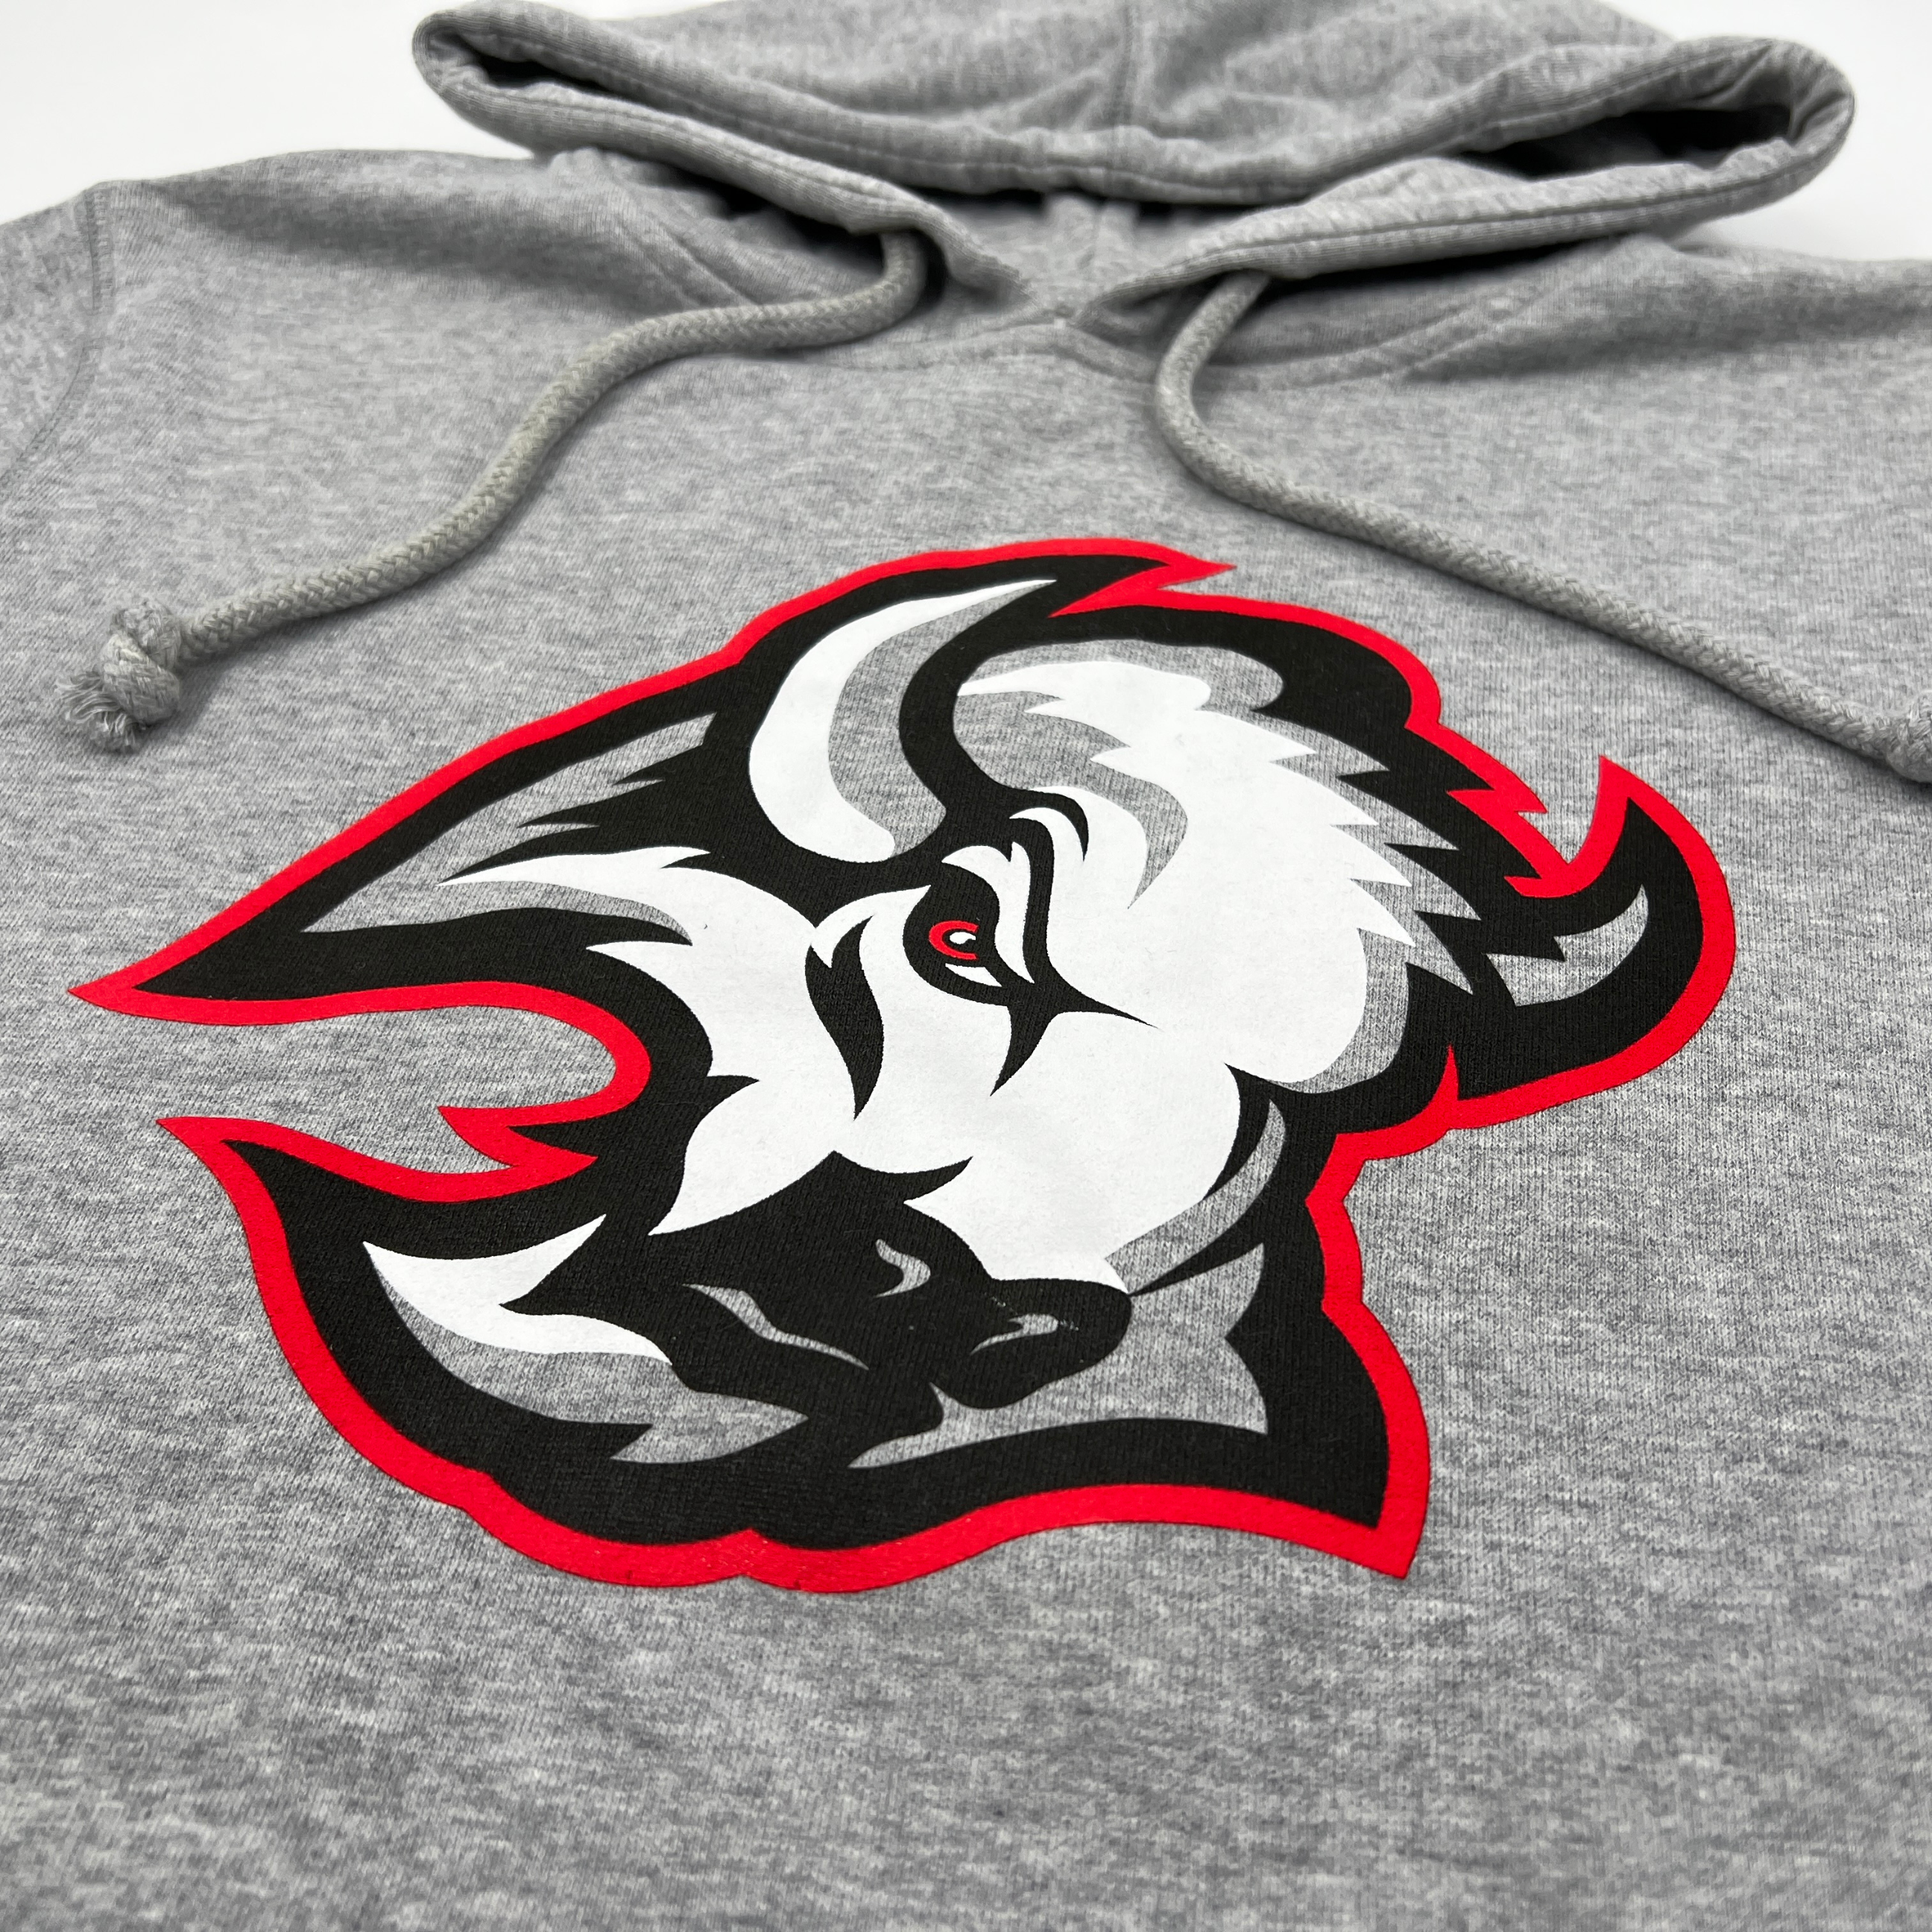 Buffalo Sabres Goat Head Red And Black 2022 sweatshirt, hoodie